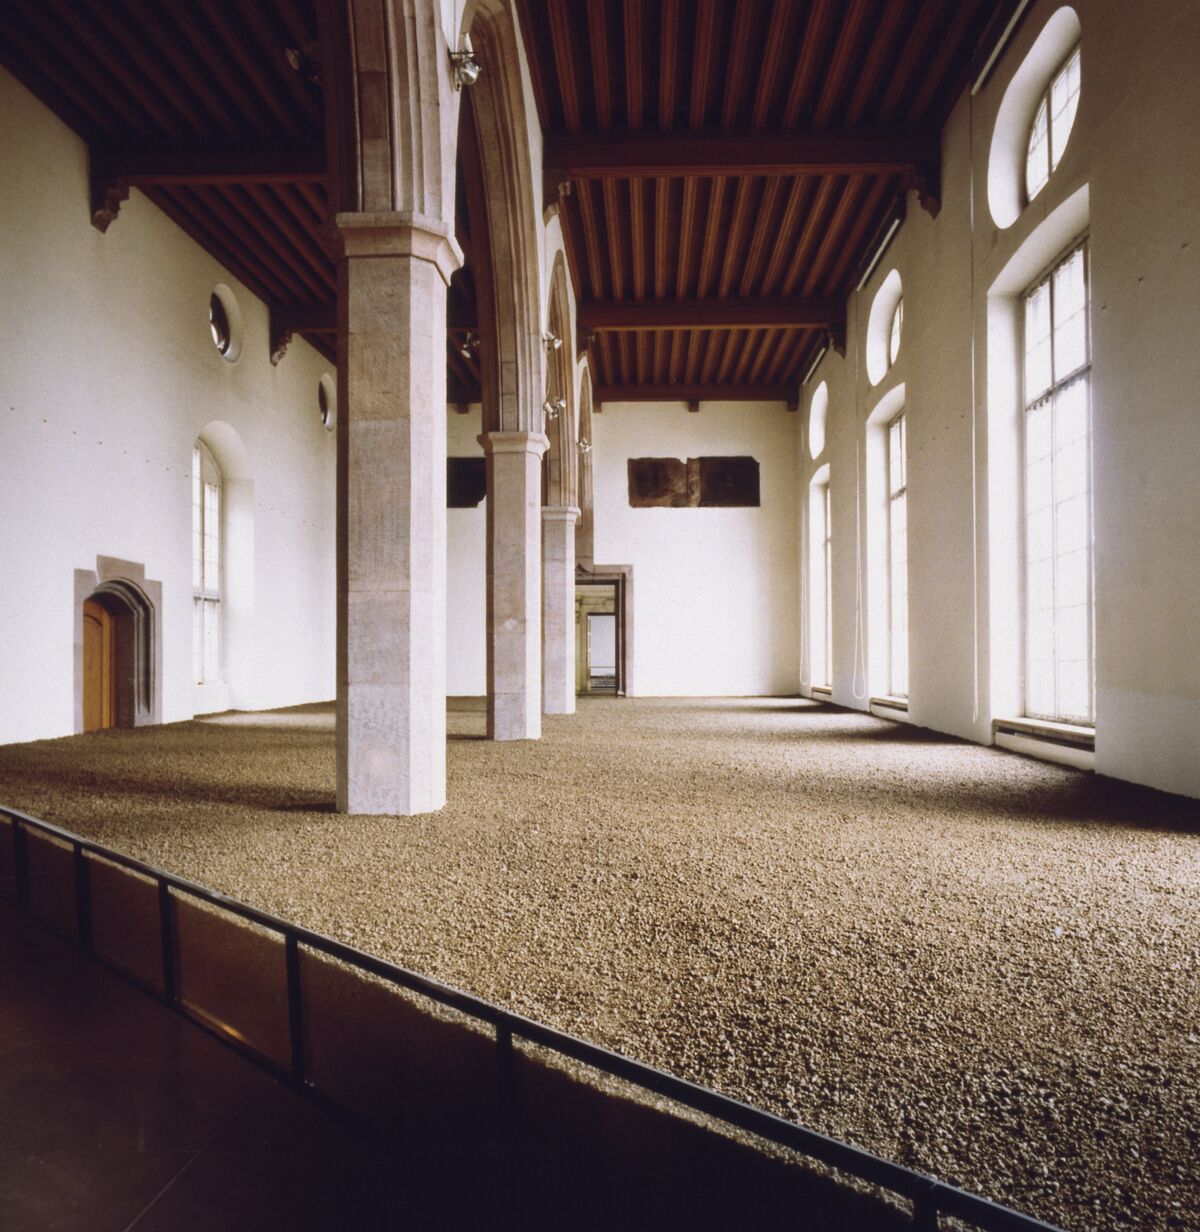 Walter De Maria, Darmstadt Earth Room, 1974. Photo by Timm Rautert. © The Estate of Walter De Maria. Courtesy of Dia Art Foundation.